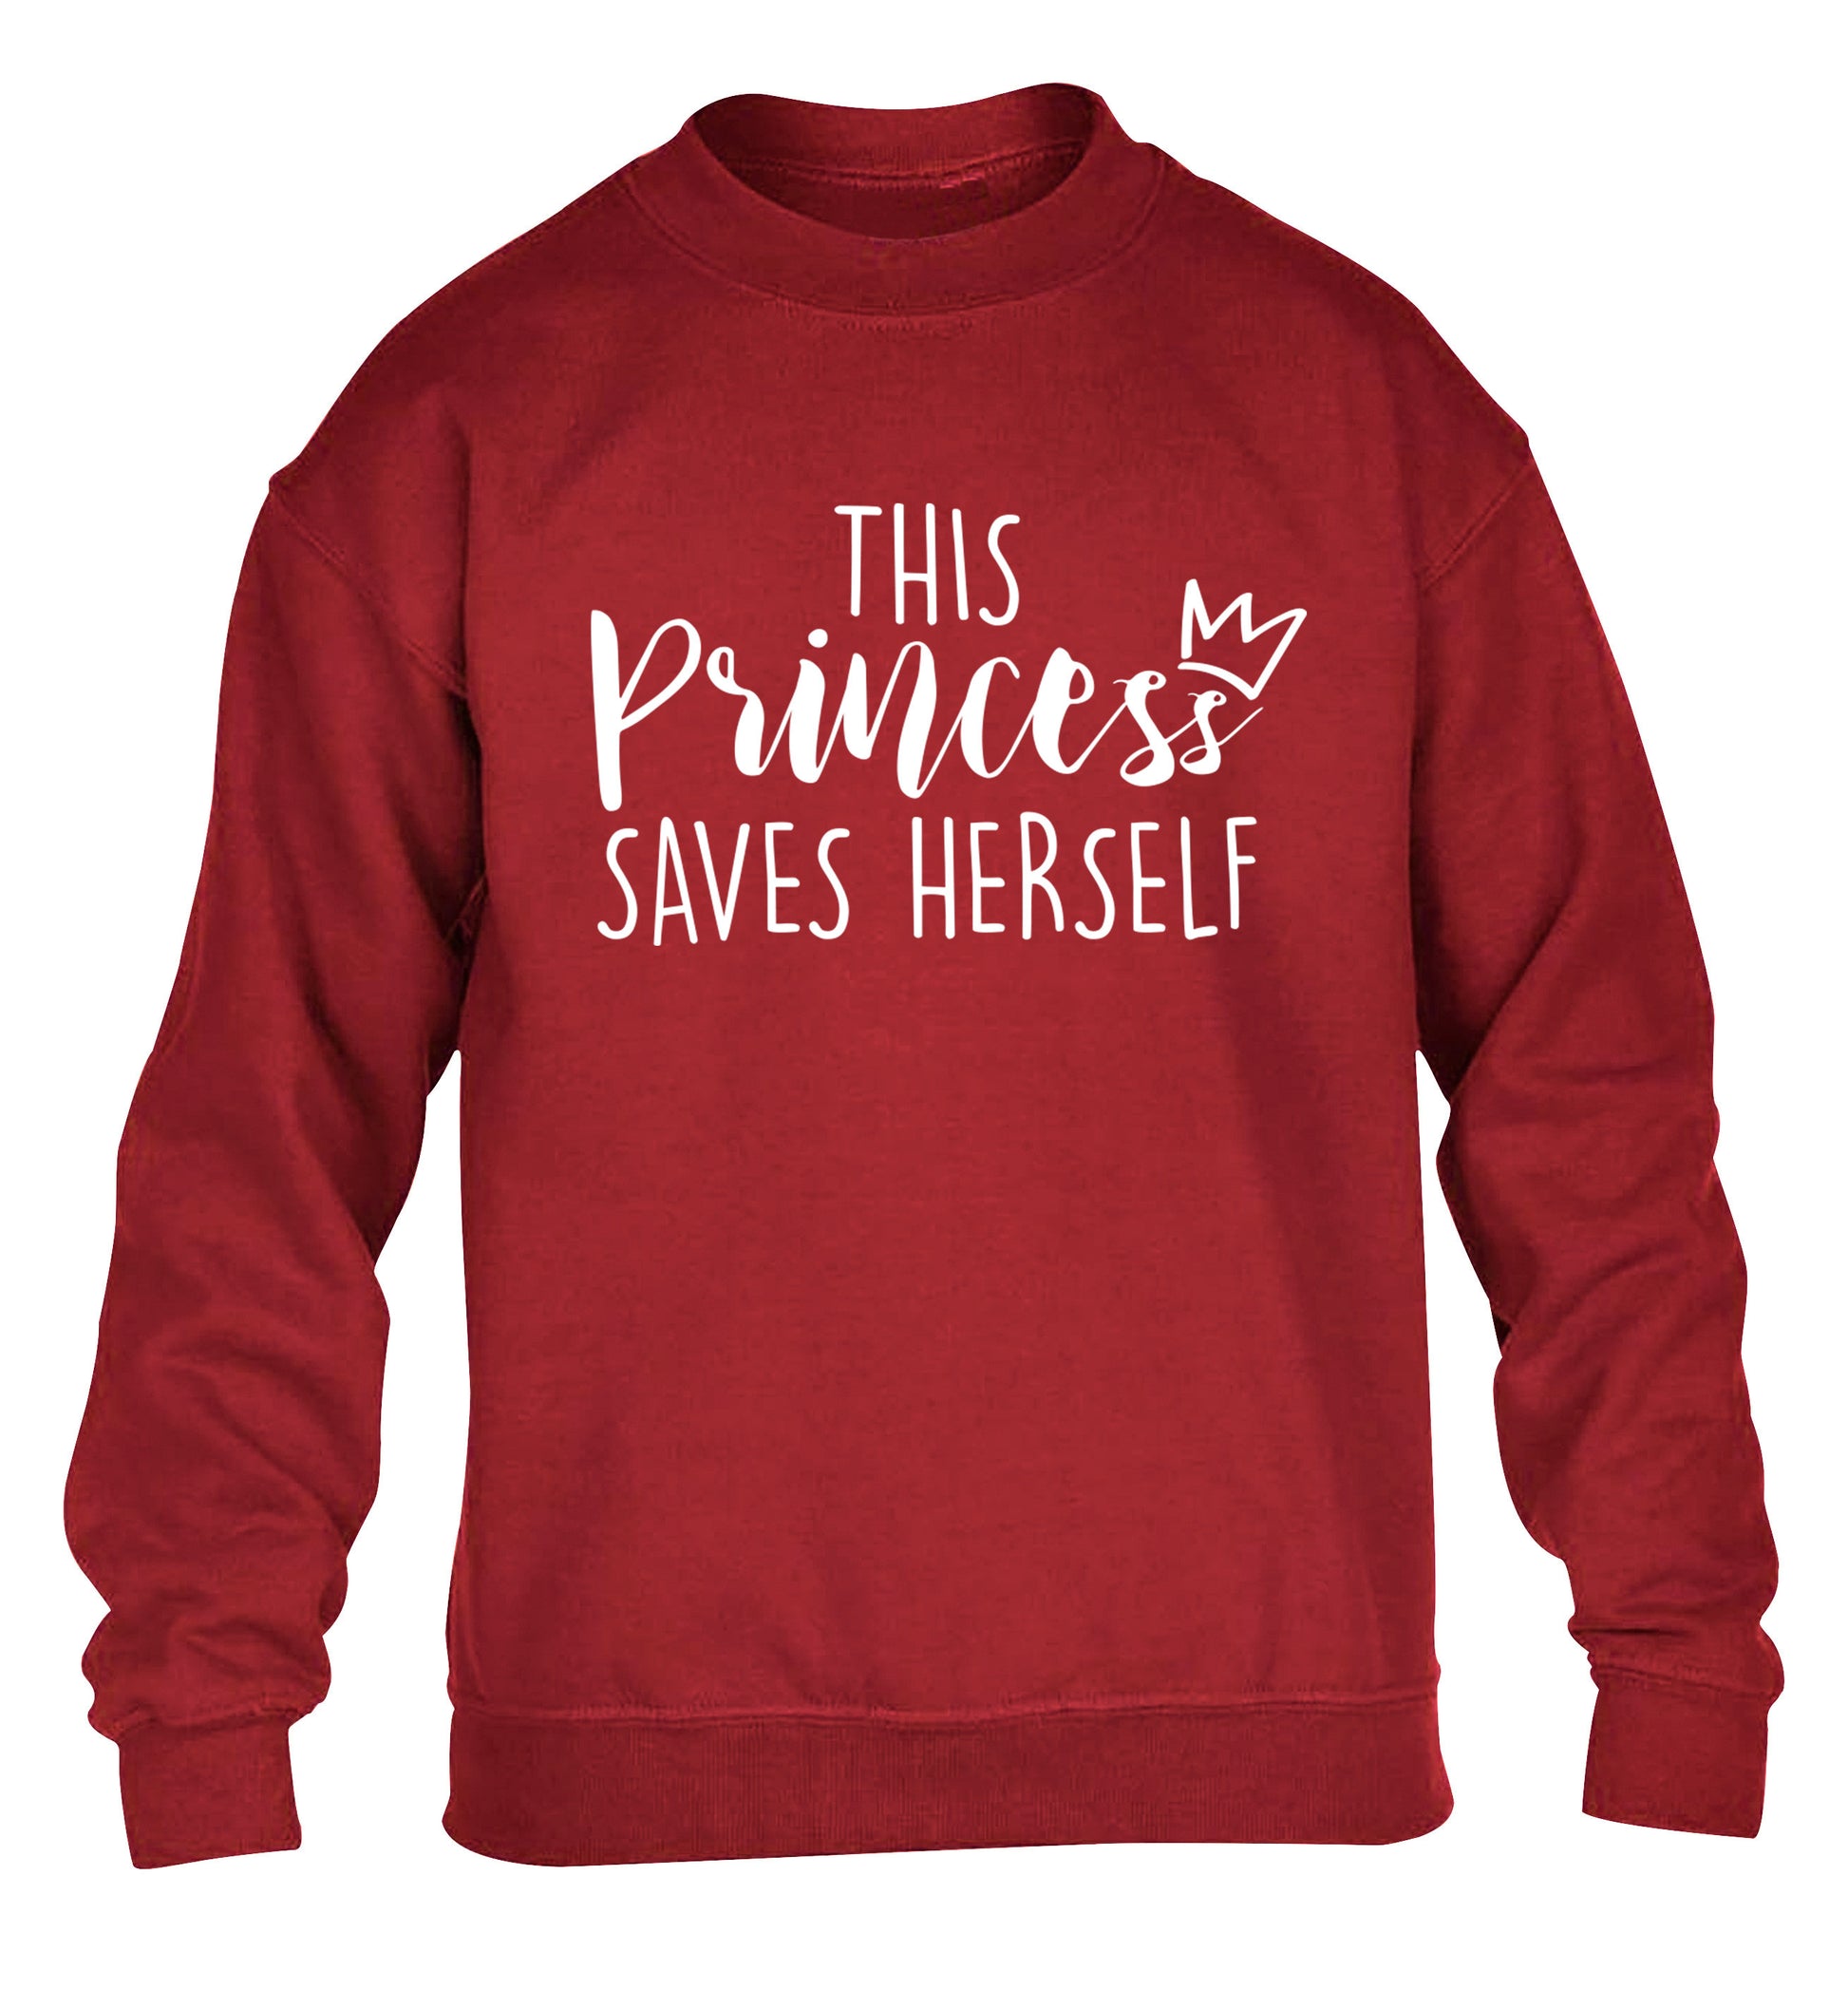 This princess saves herself children's grey sweater 12-14 Years